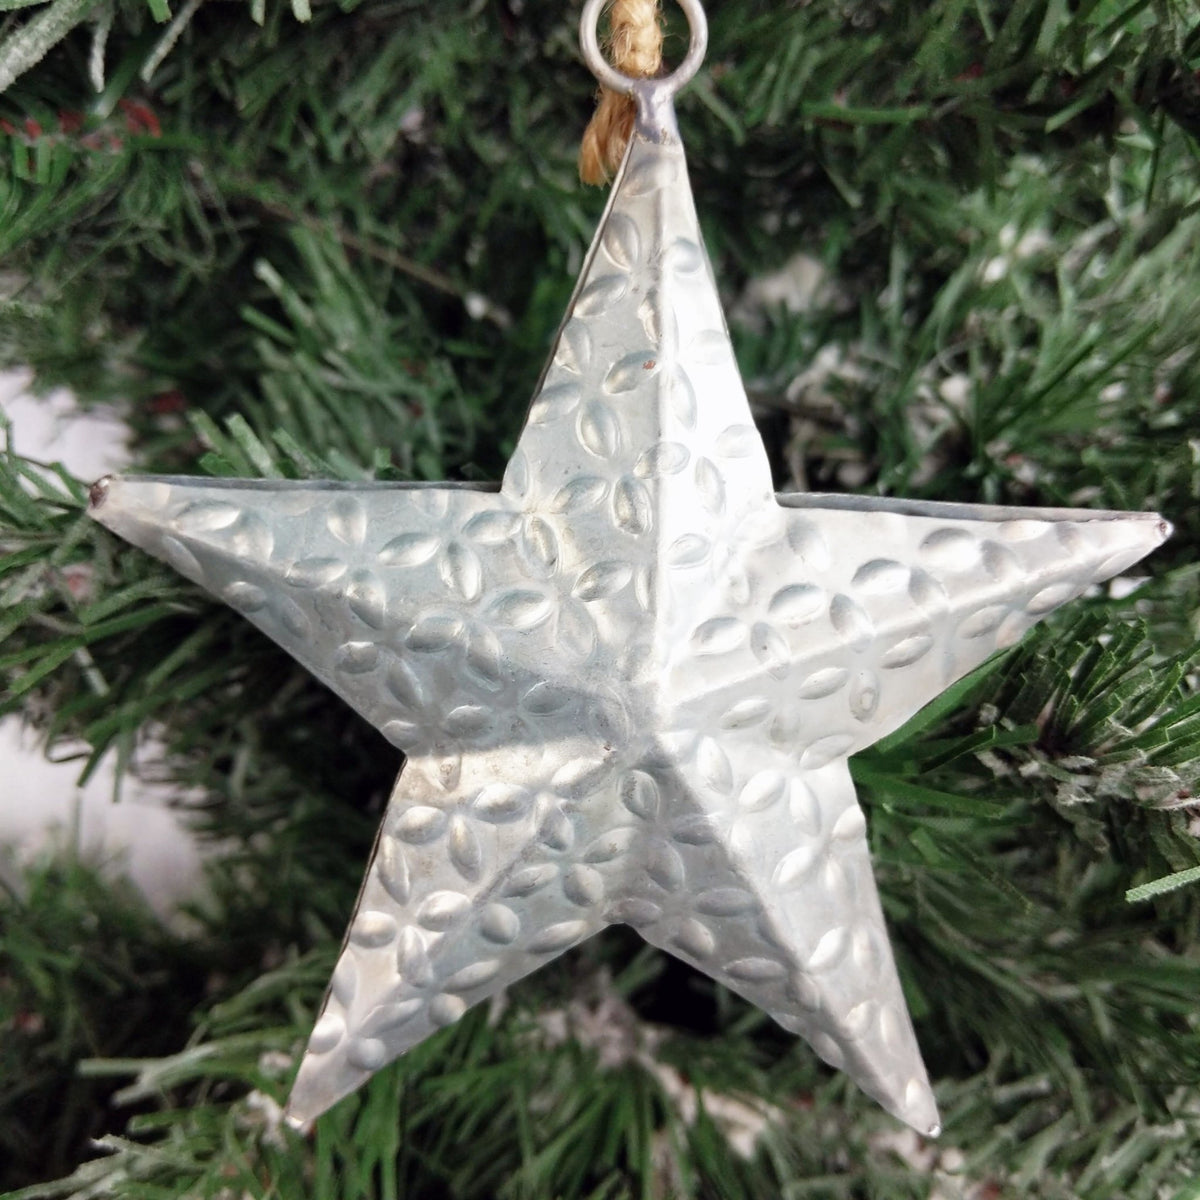 Decorative Metal Hanging Star on Christmas Tree close up